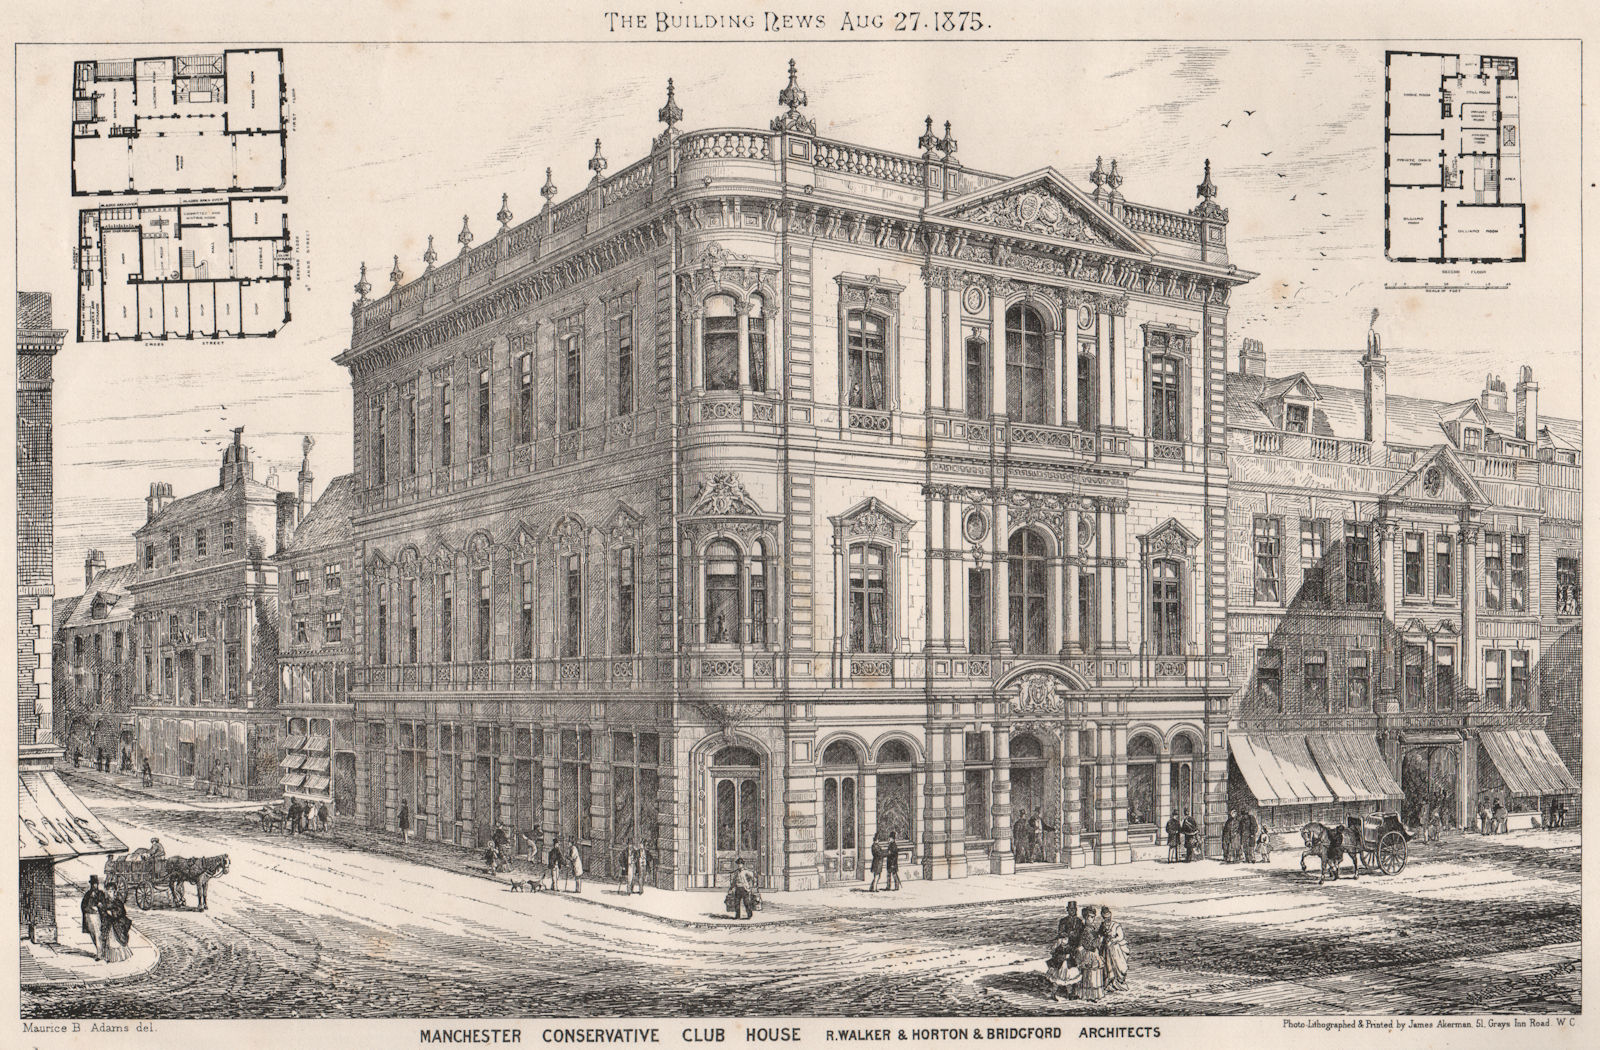 Associate Product Manchester Conservative Club House; R. Walker & Horton & Bridgford Archts 1875